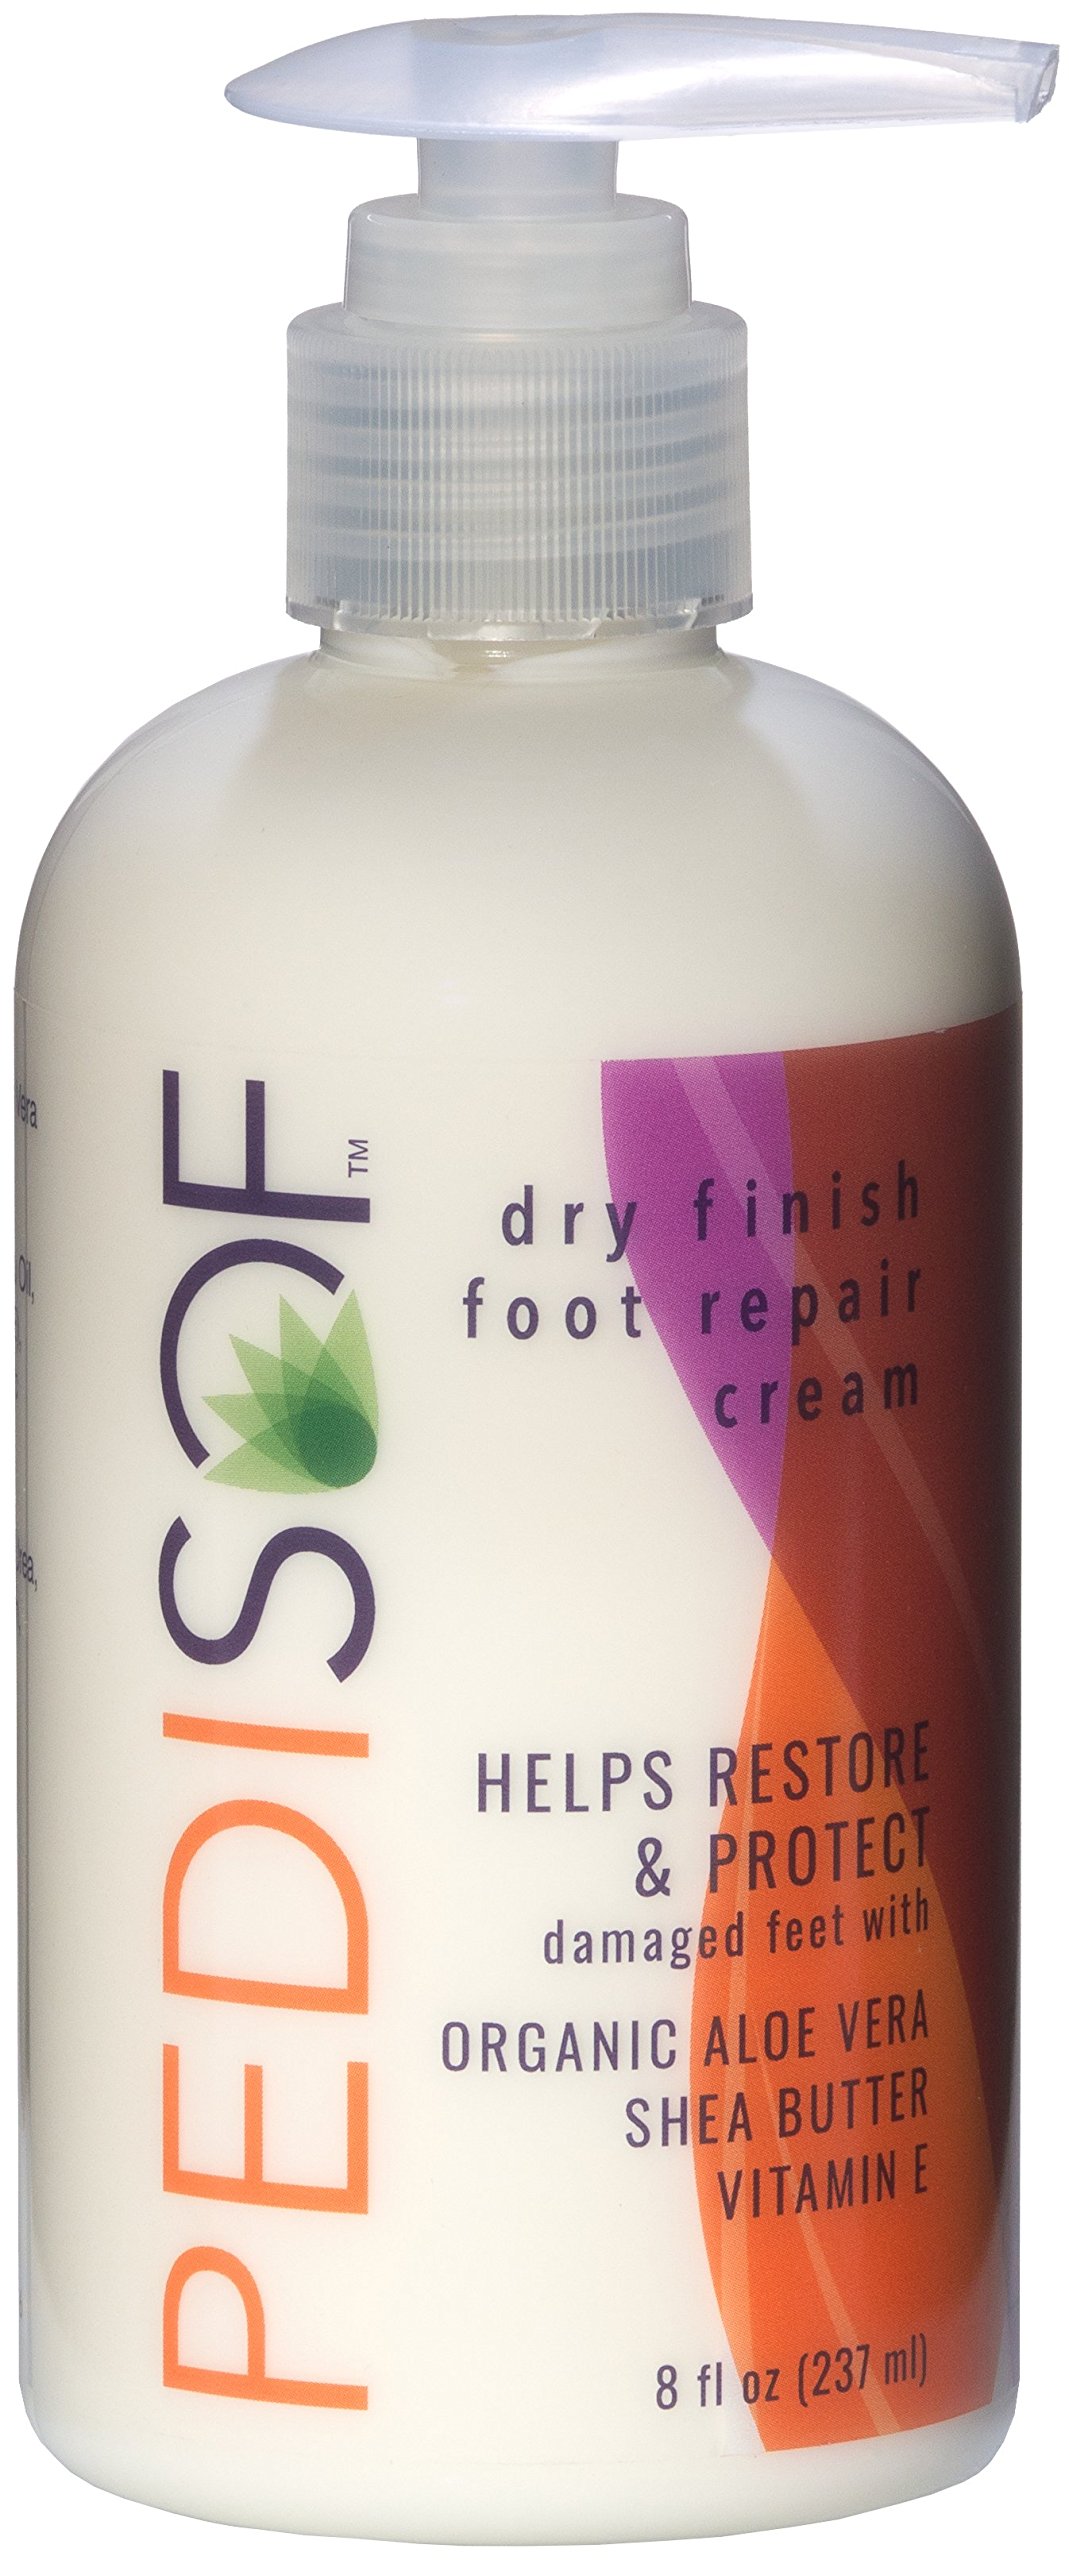 Clavel PediSof Dry Finish Foot Repair Cream, 8 Fluid Ounce